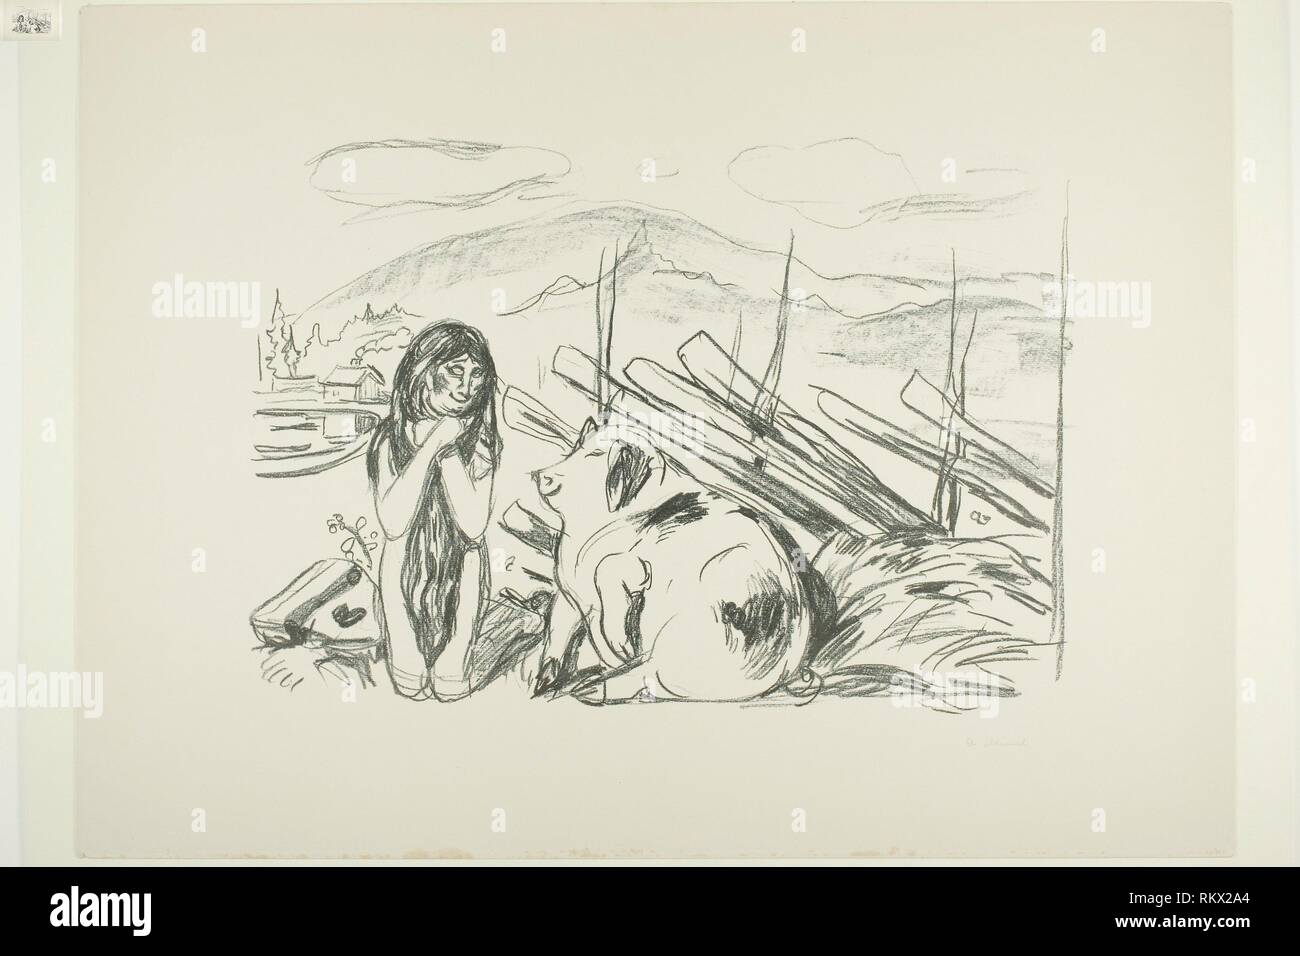 Omega and the Pig - 1908/09 - Edvard Munch Norwegian, 1863-1944 - Artist: Edvard Munch, Origin: Norway, Date: 1908-1909, Medium: Lithograph on paper, Stock Photo